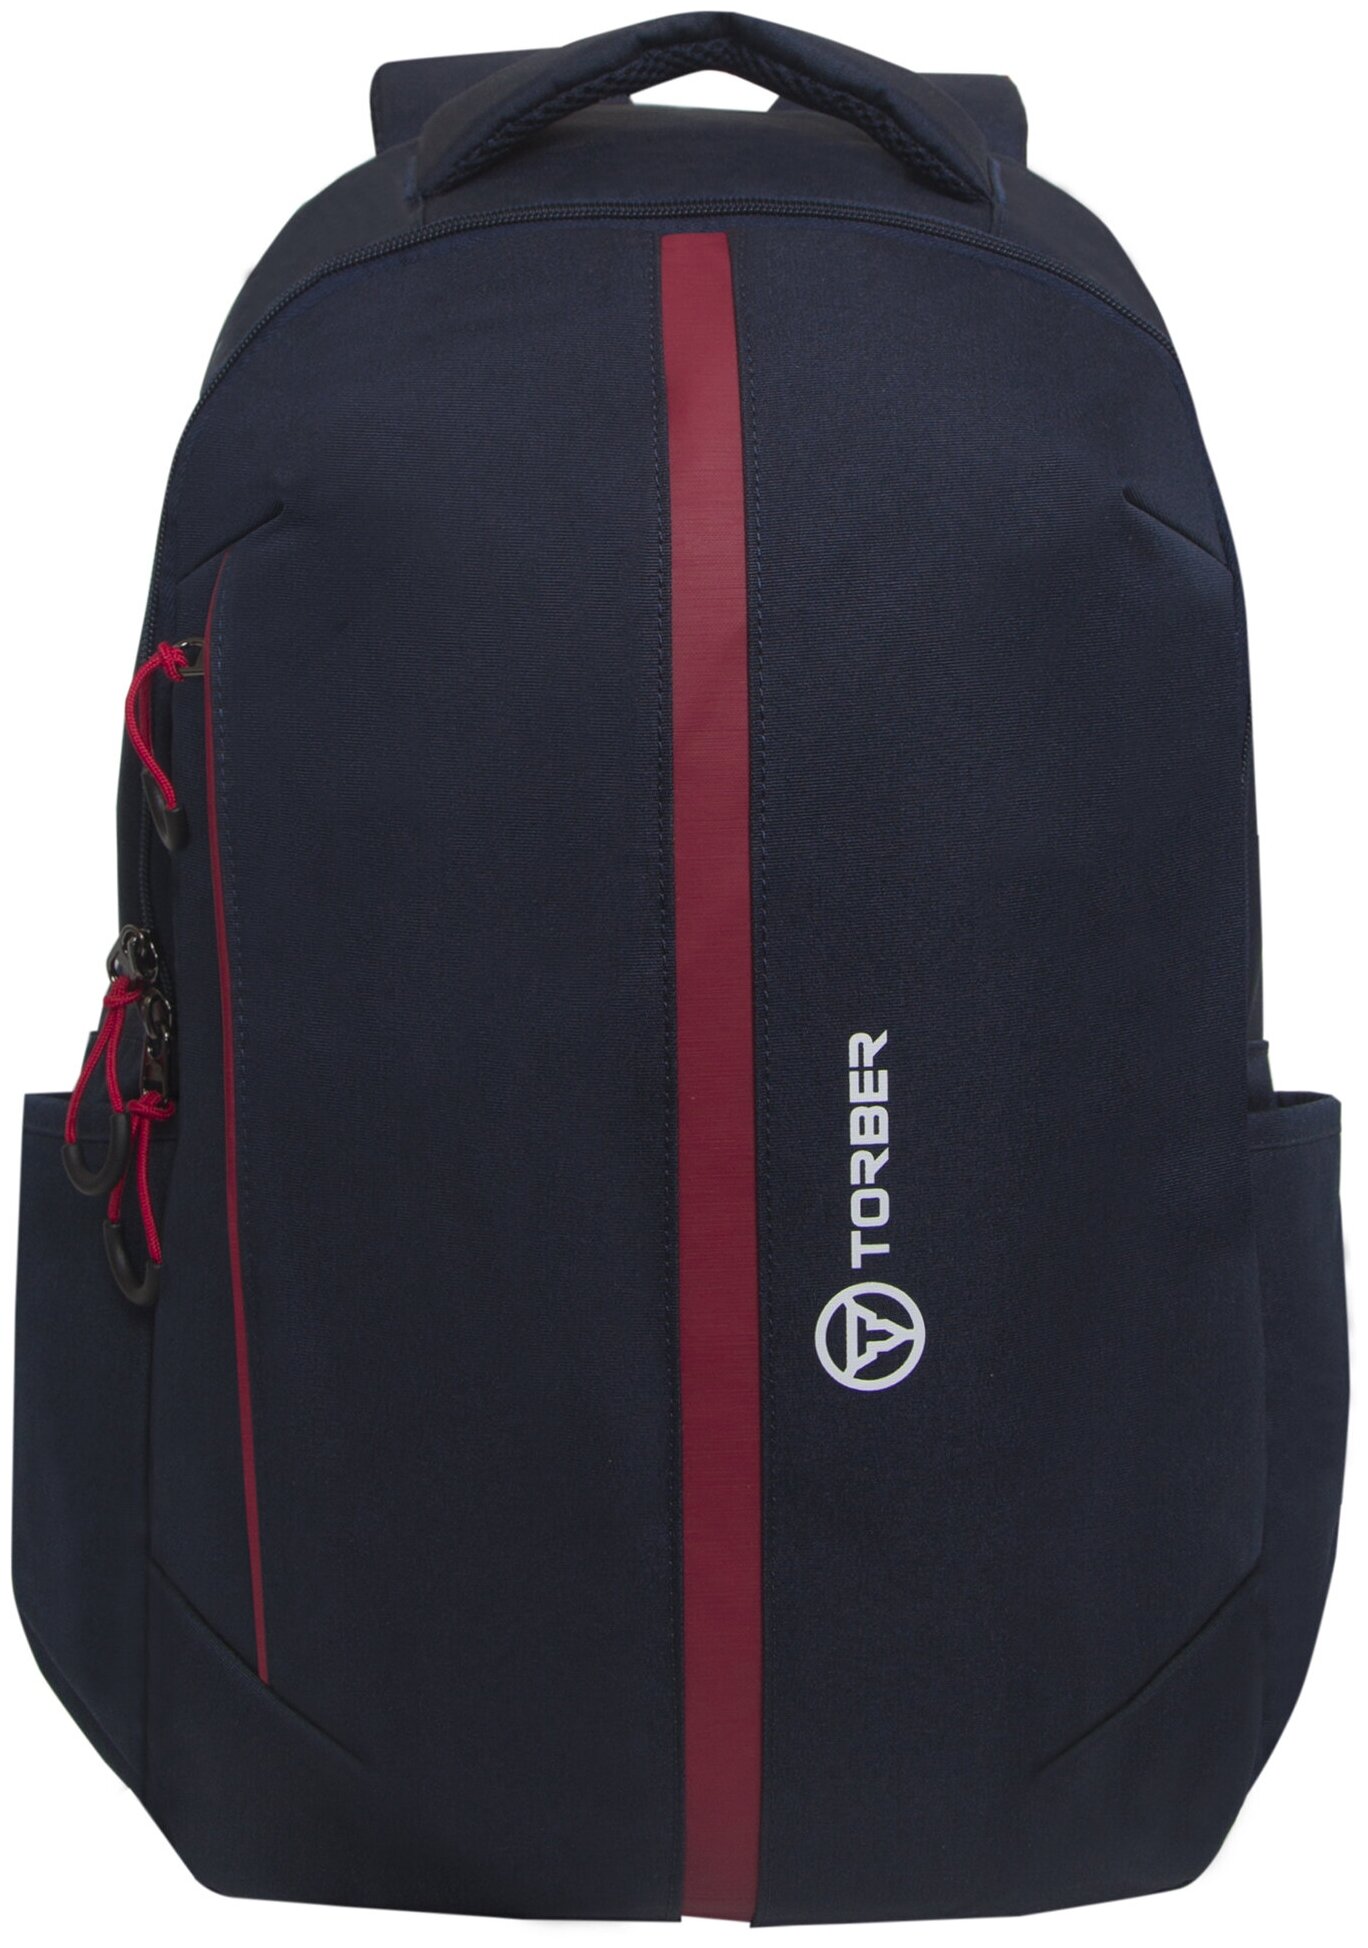 Рюкзак TORBER FORGRAD 2.0 с отделением для ноутбука 15,6", синий, полиэстер меланж, 46 х 31 x 17 см, T9281-BLU